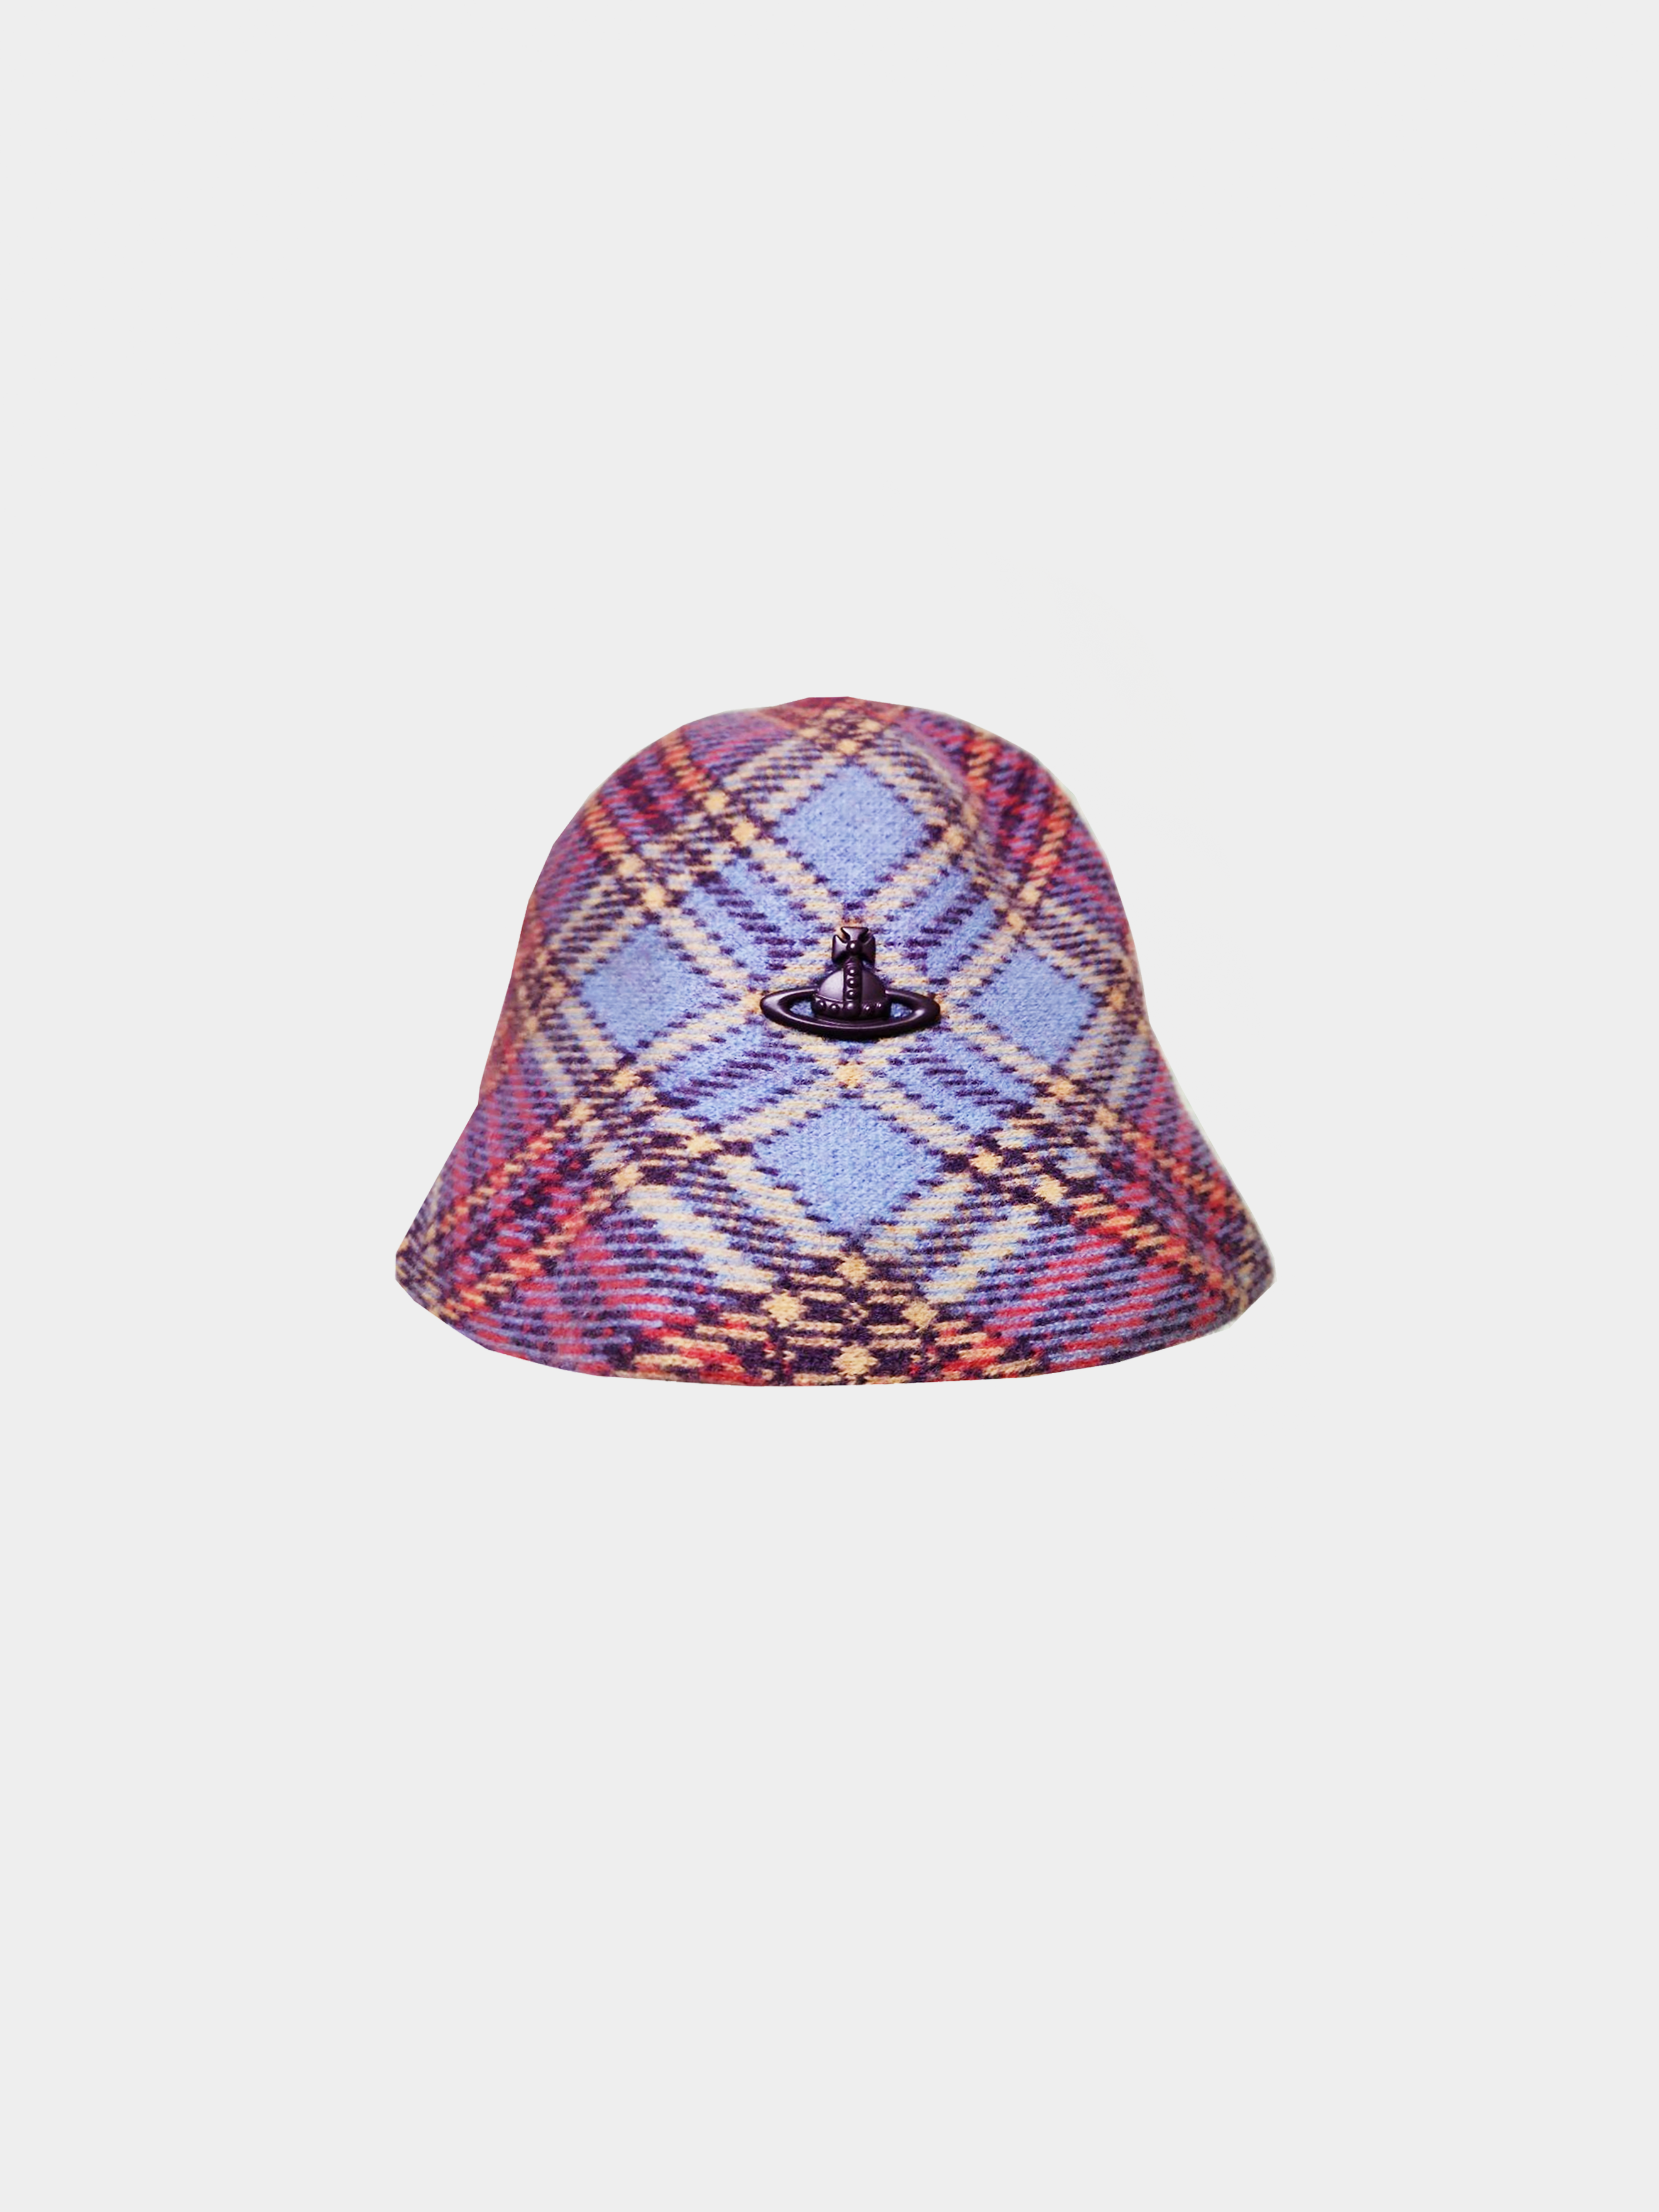 Vivienne Westwood 1990s Plaid Bucket Hat